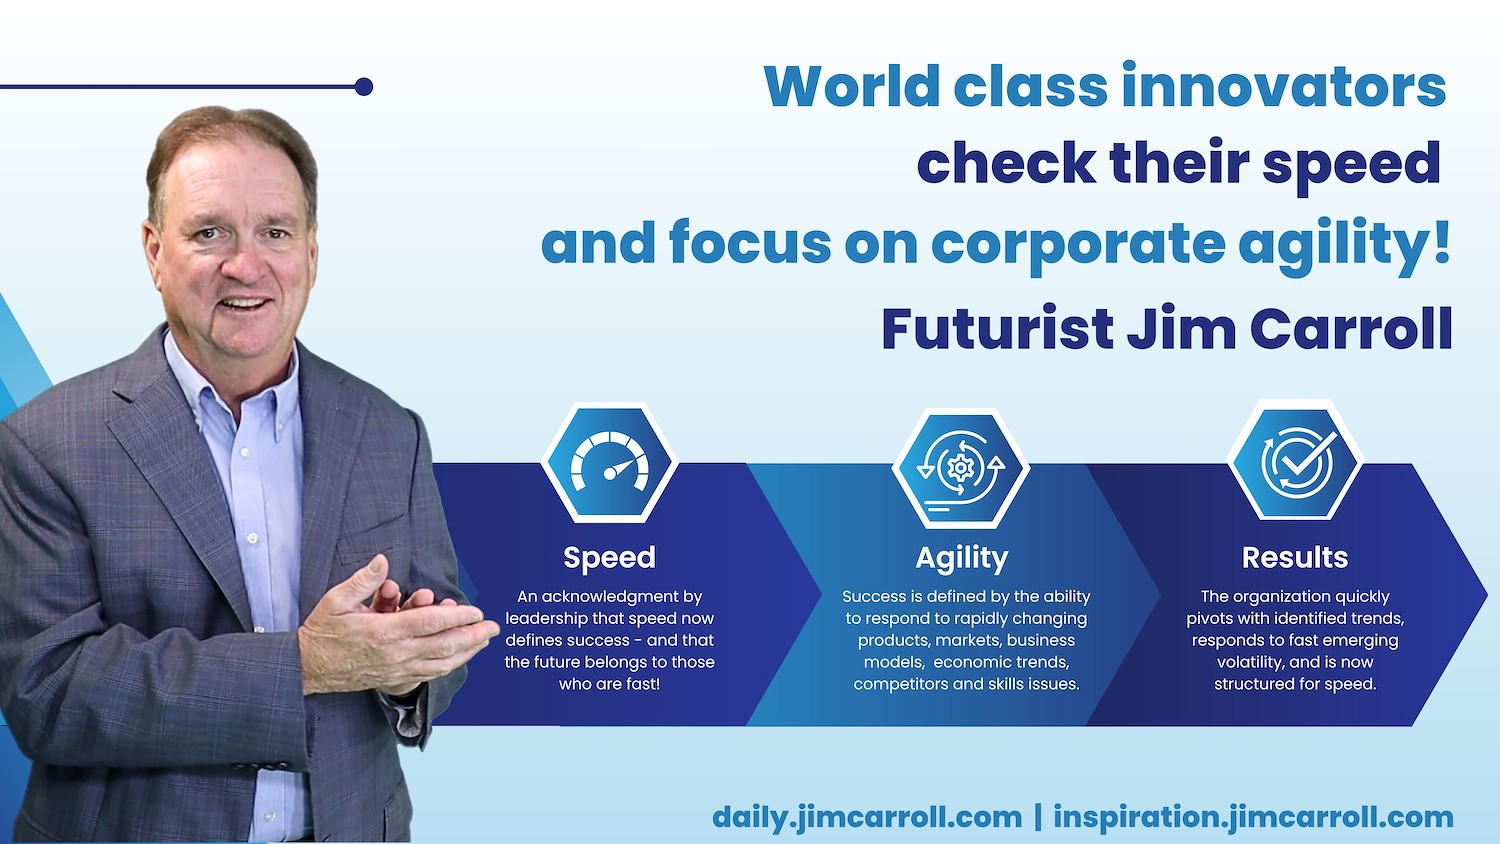 "World class innovators check their speed and focus on corporate agility" - Futurist Jim Carroll